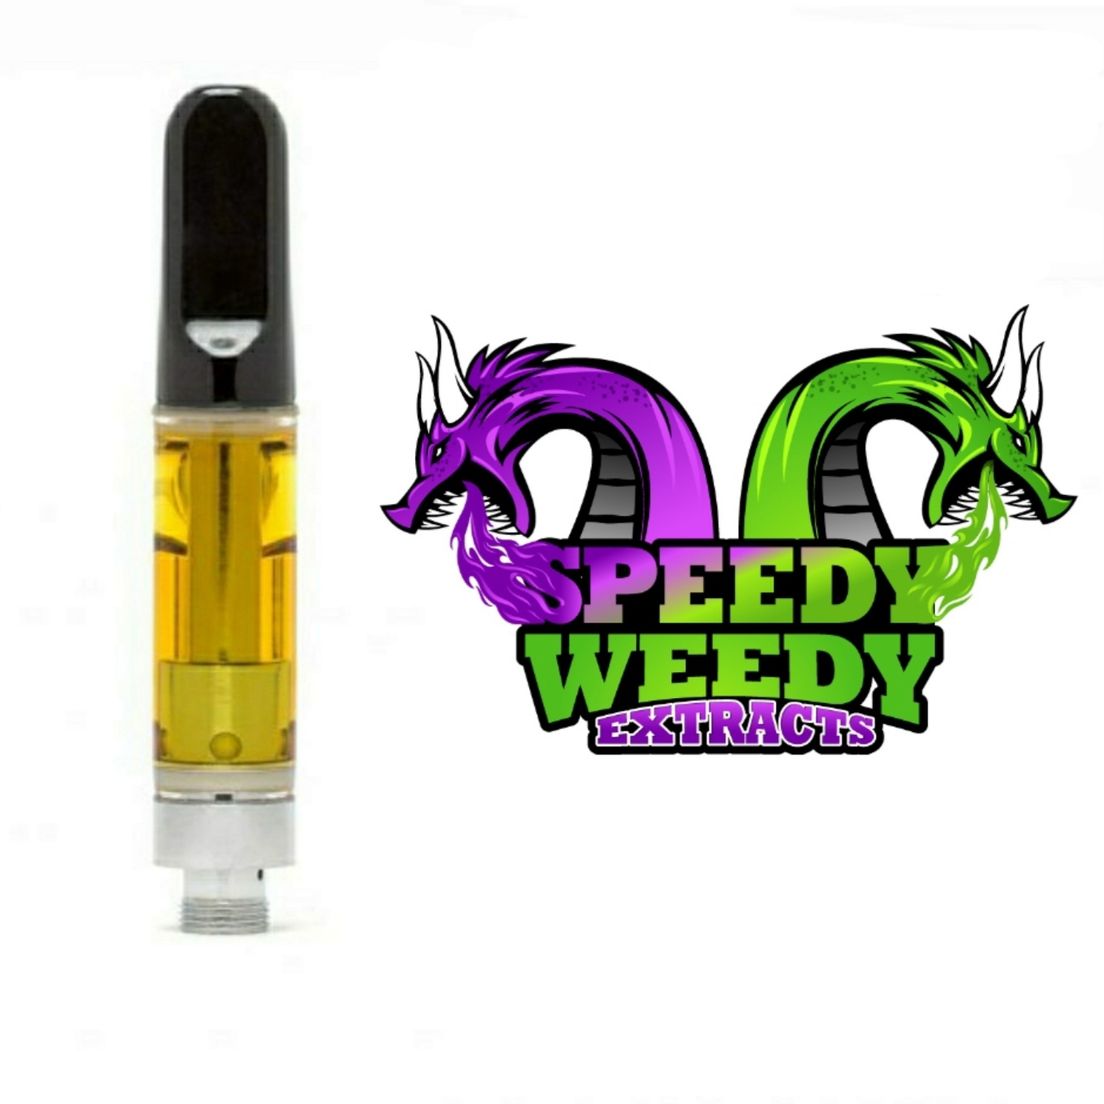 1. Speedy Weedy 1g THC Vape Cartridge - Black Cherry Punch (I)